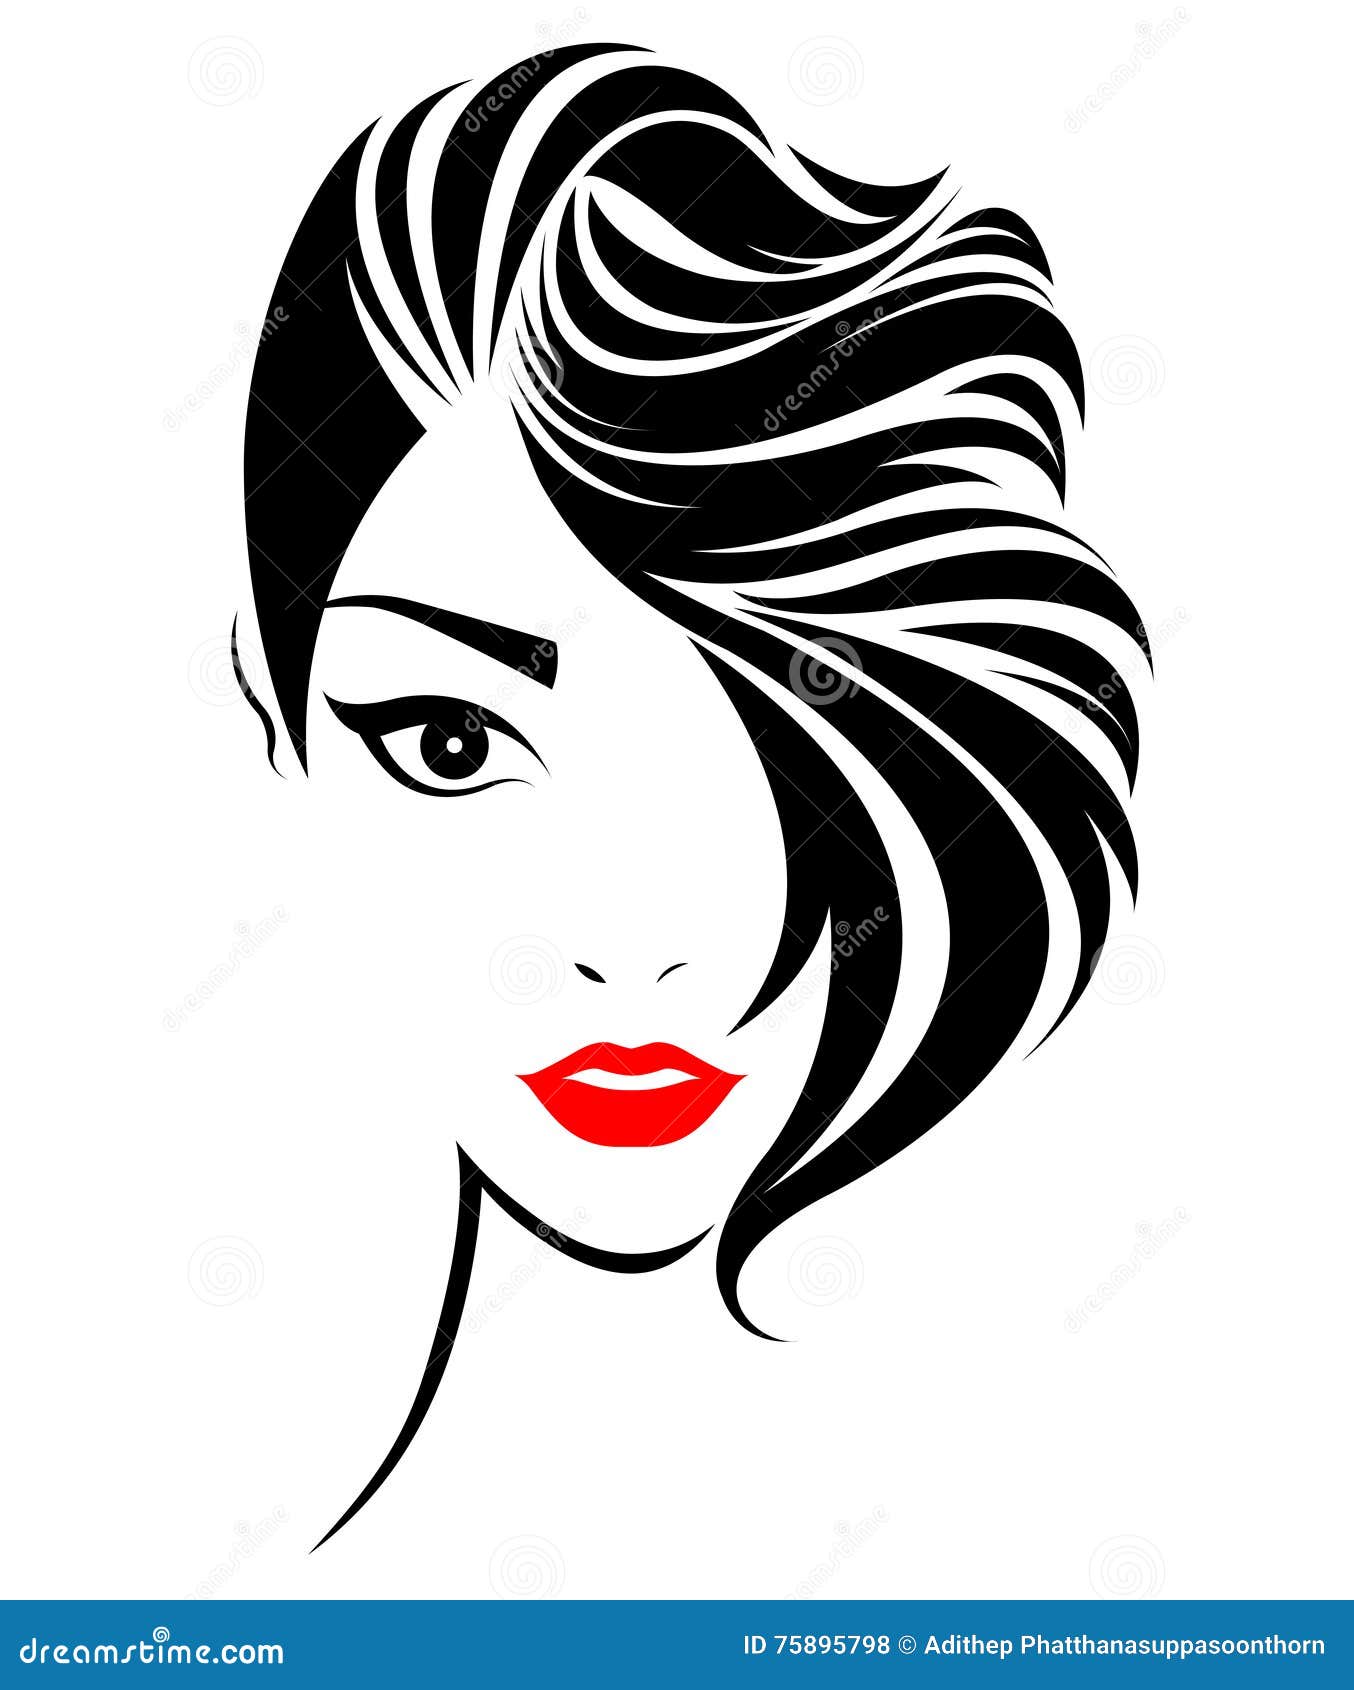 women short hair style icon, logo women face